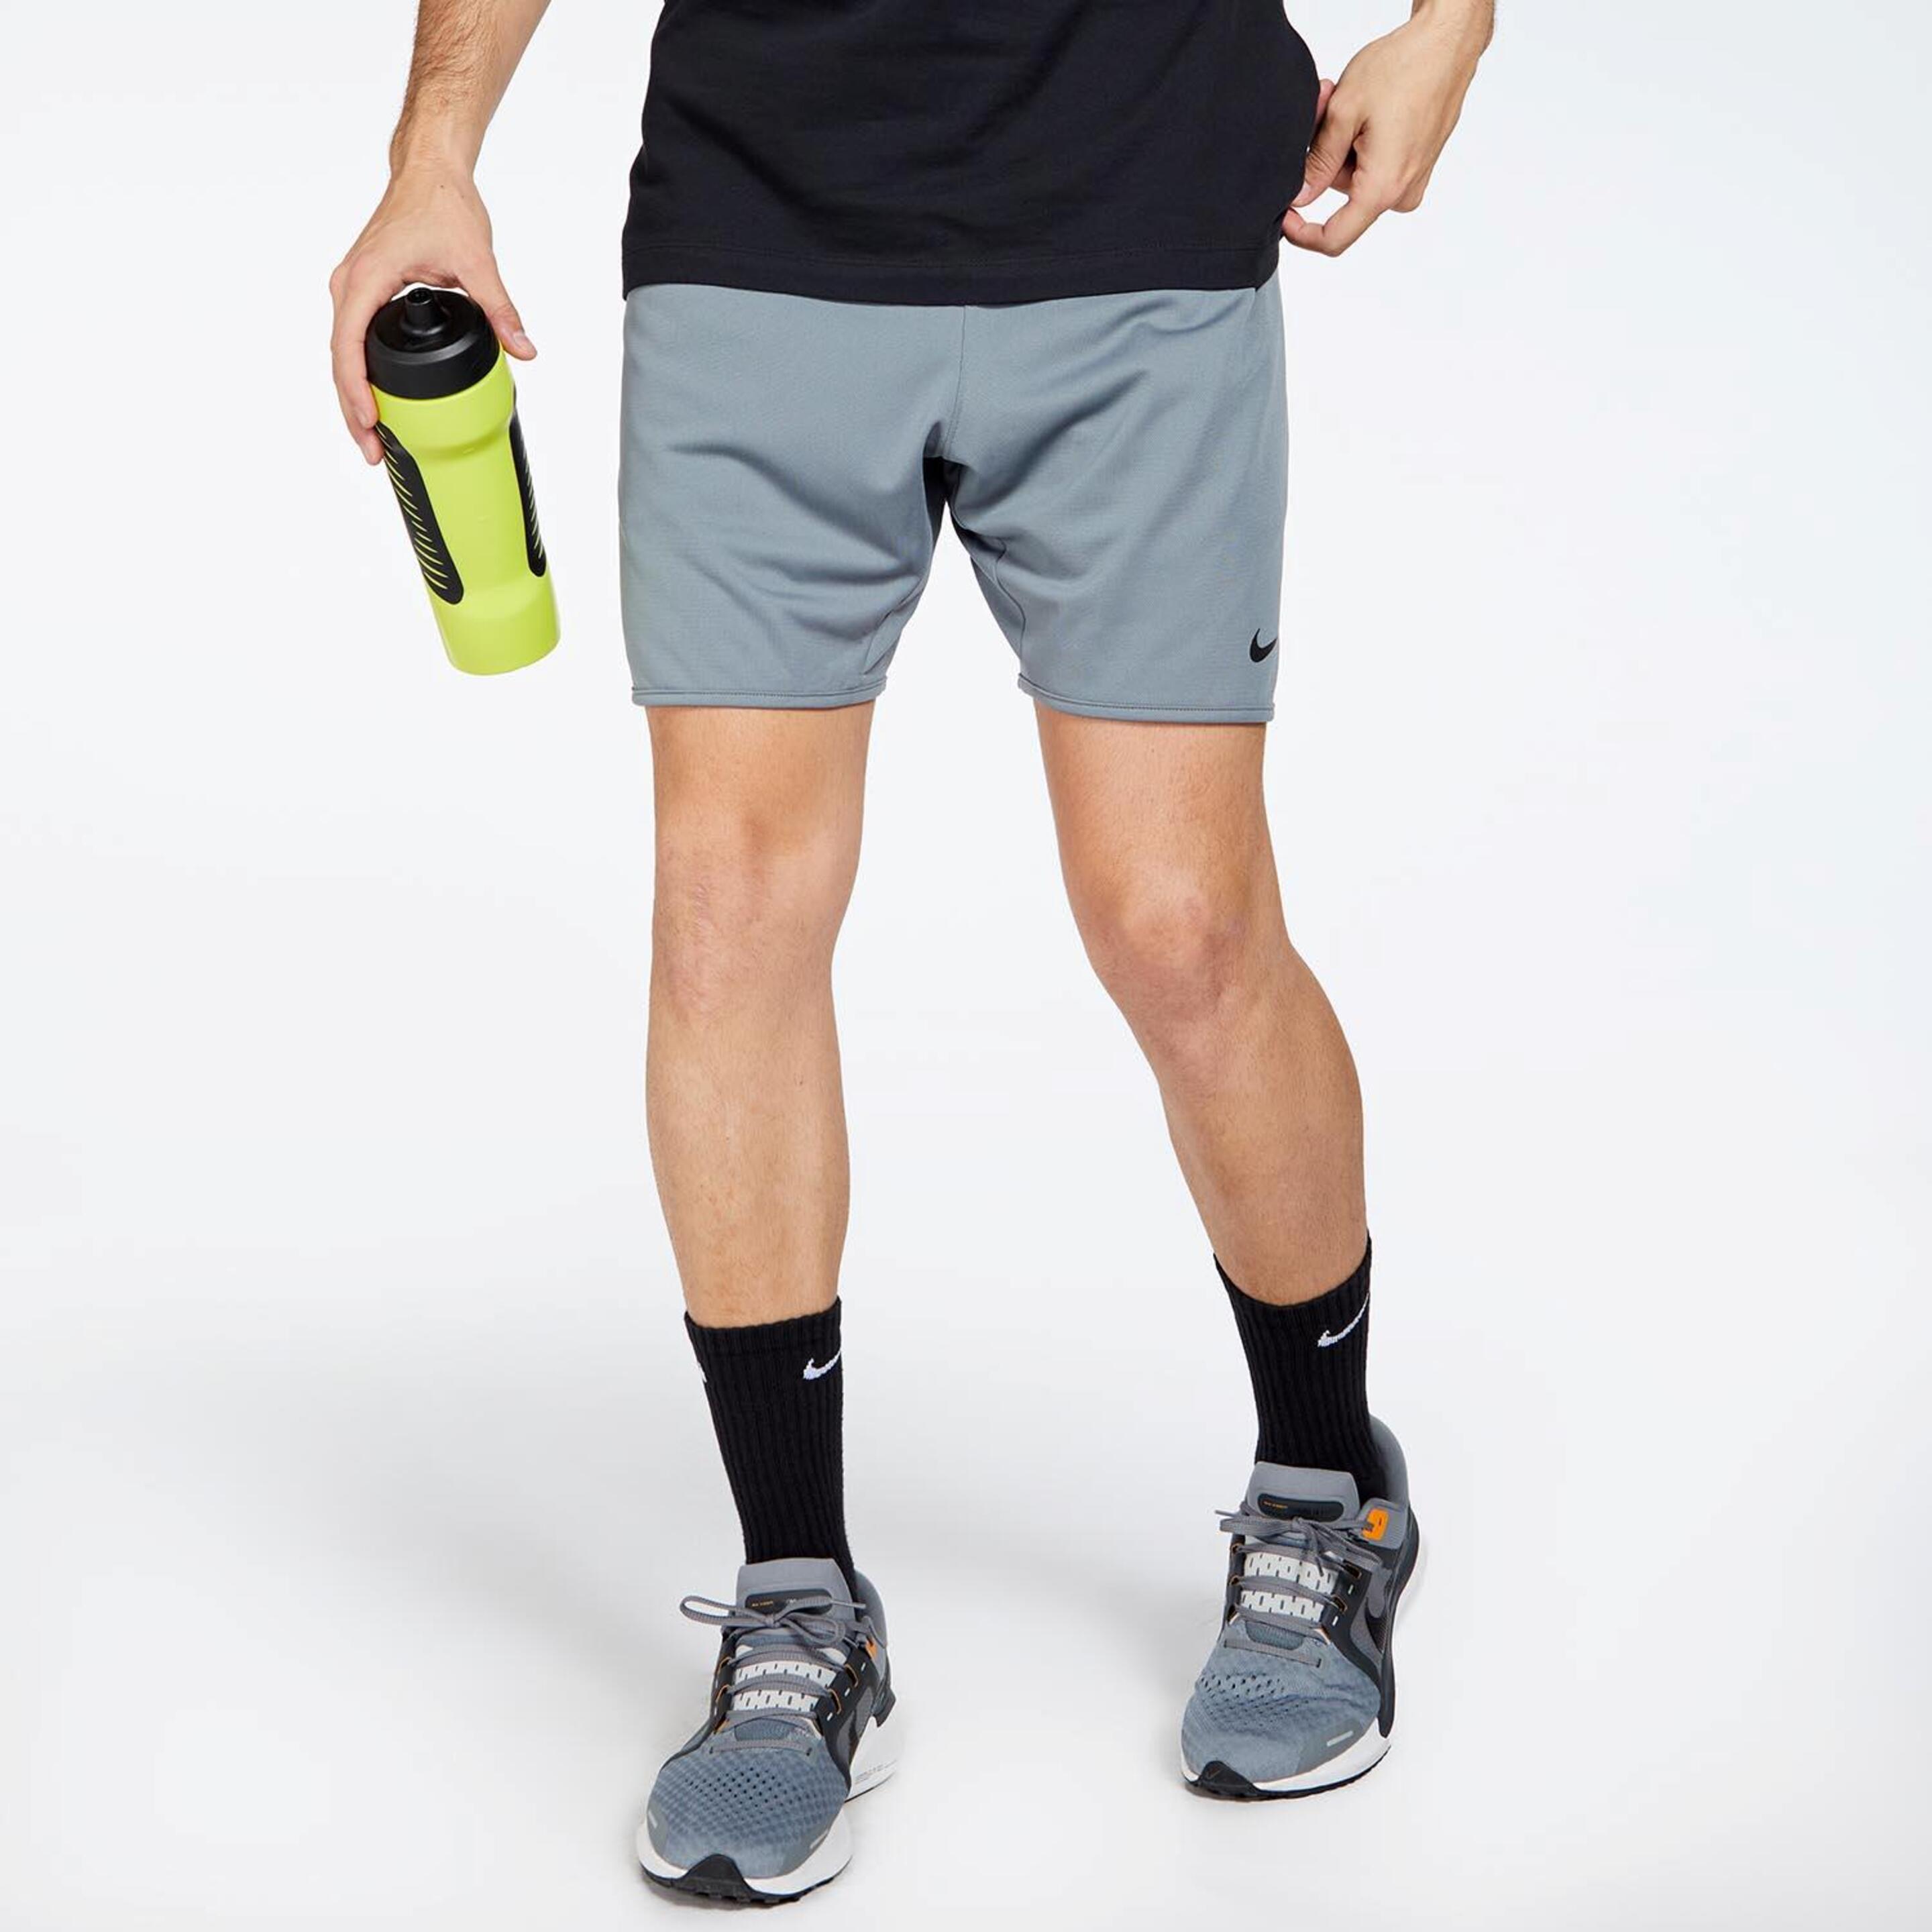 Nike Totality Knit - gris - Calções Running Homem